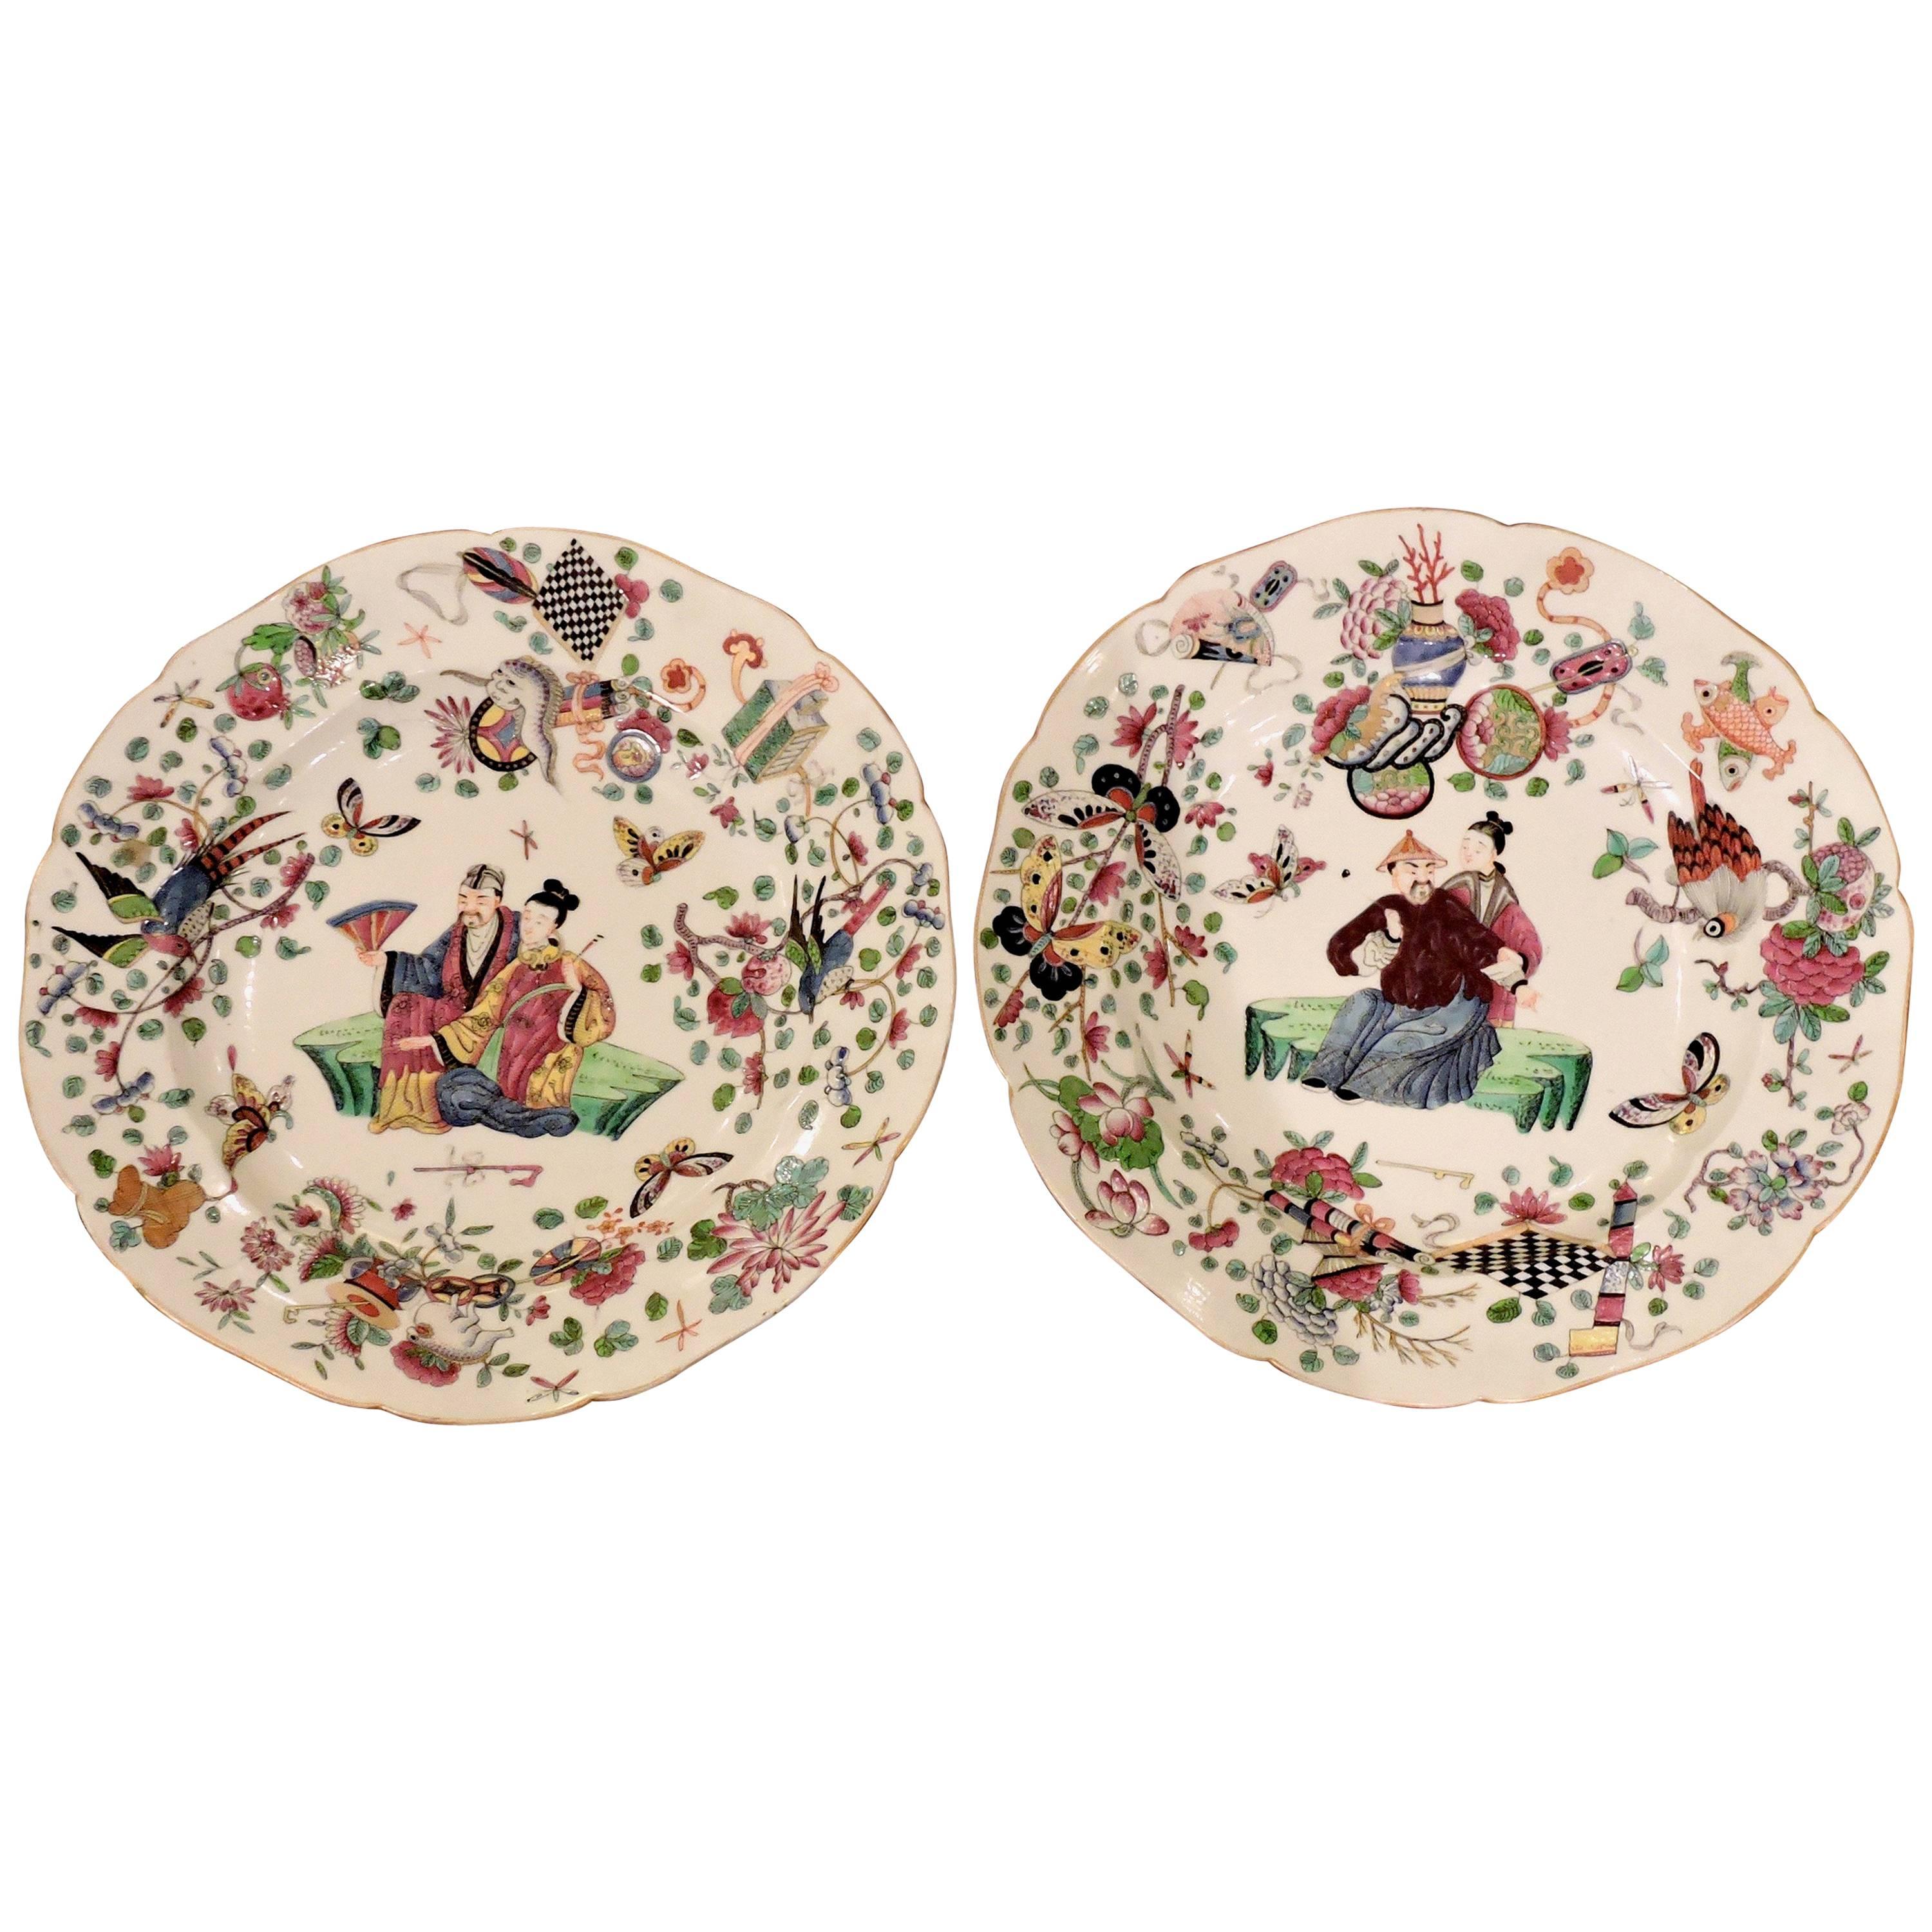 Pair of 19th Century Polychromed Bayeux Porcelain Pendant Plates